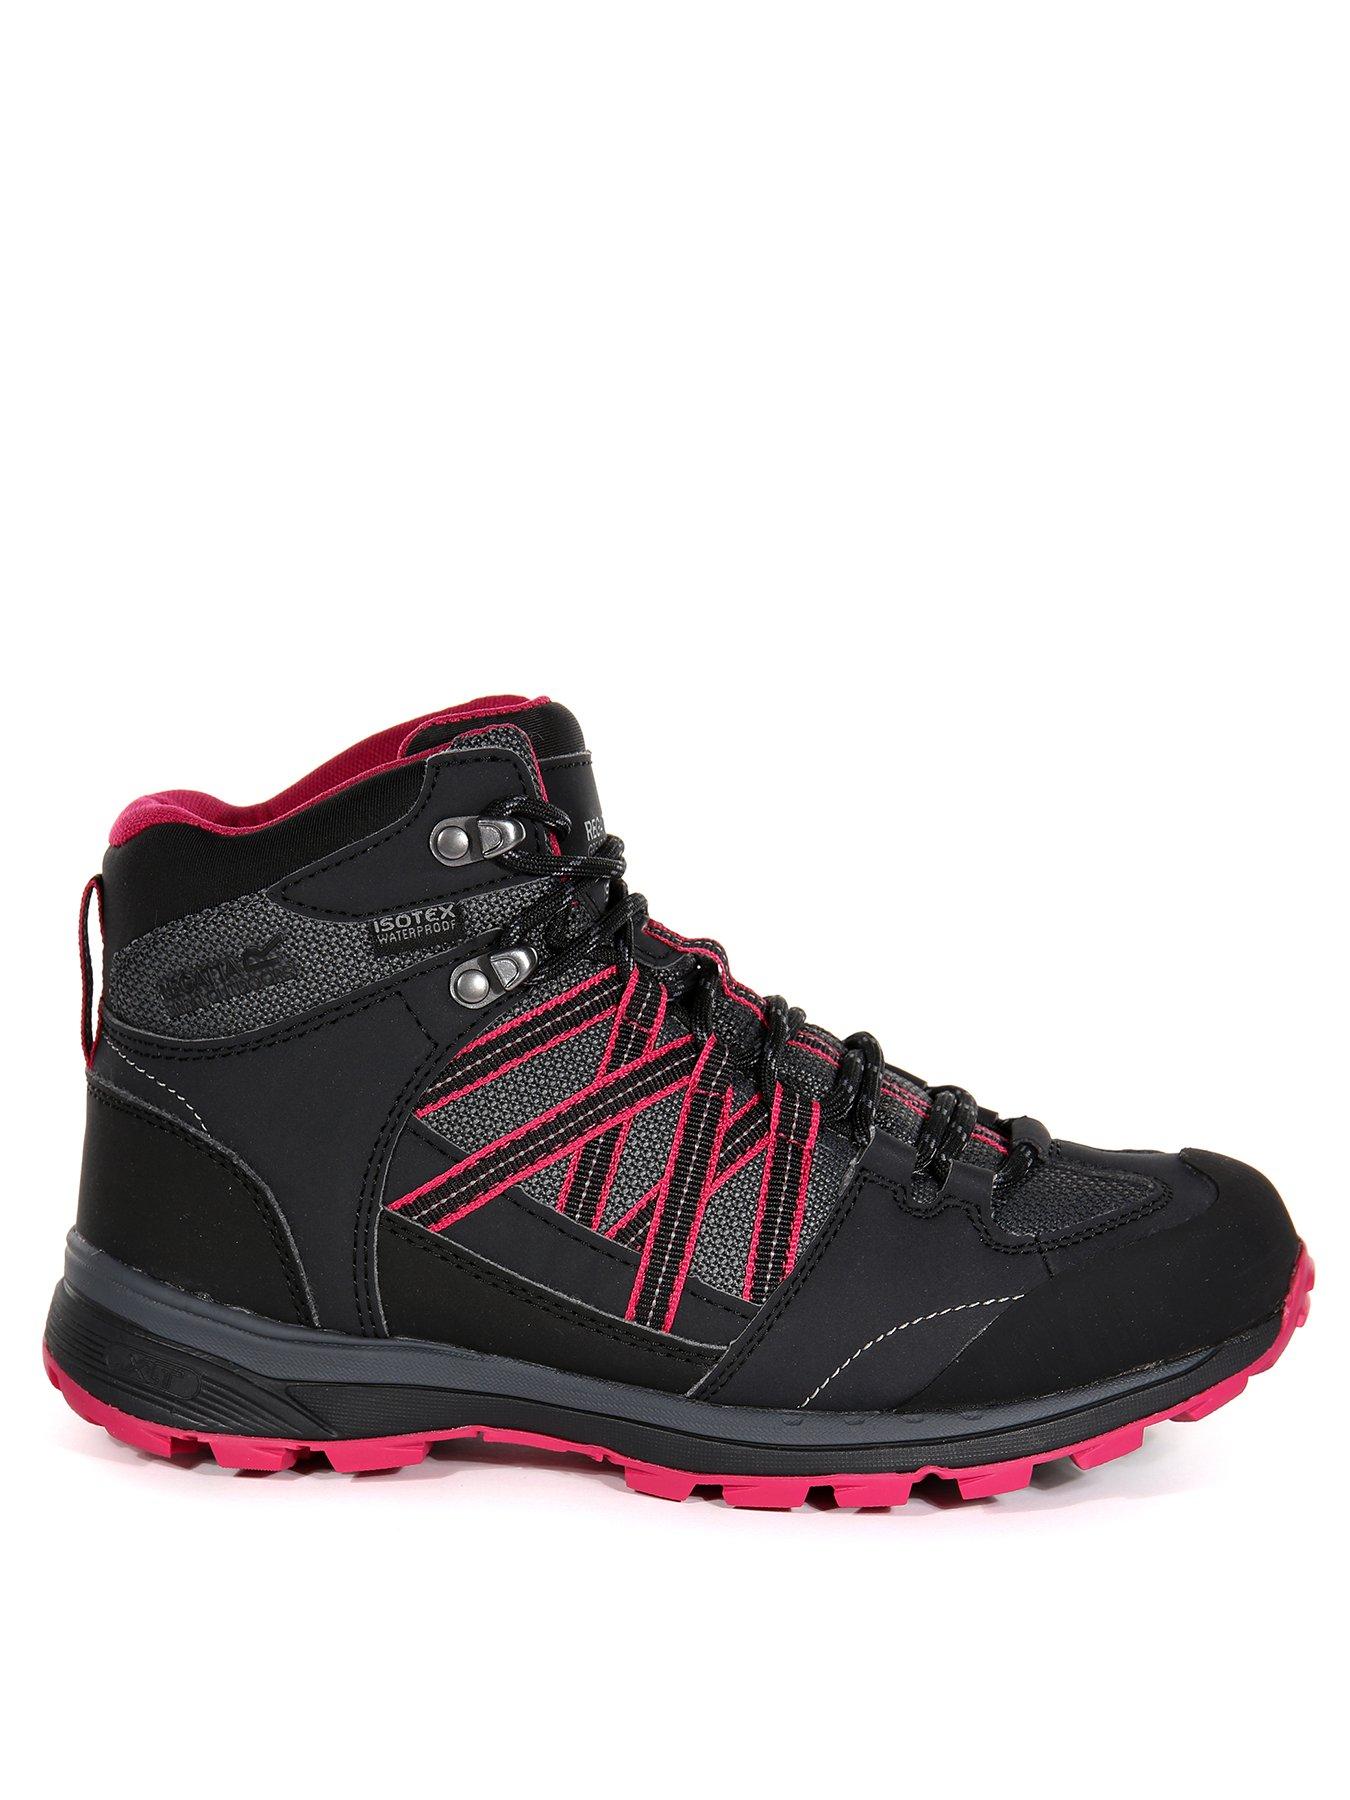 Shoes & boots Samaris Mid II Walking Boot - Black/Pink